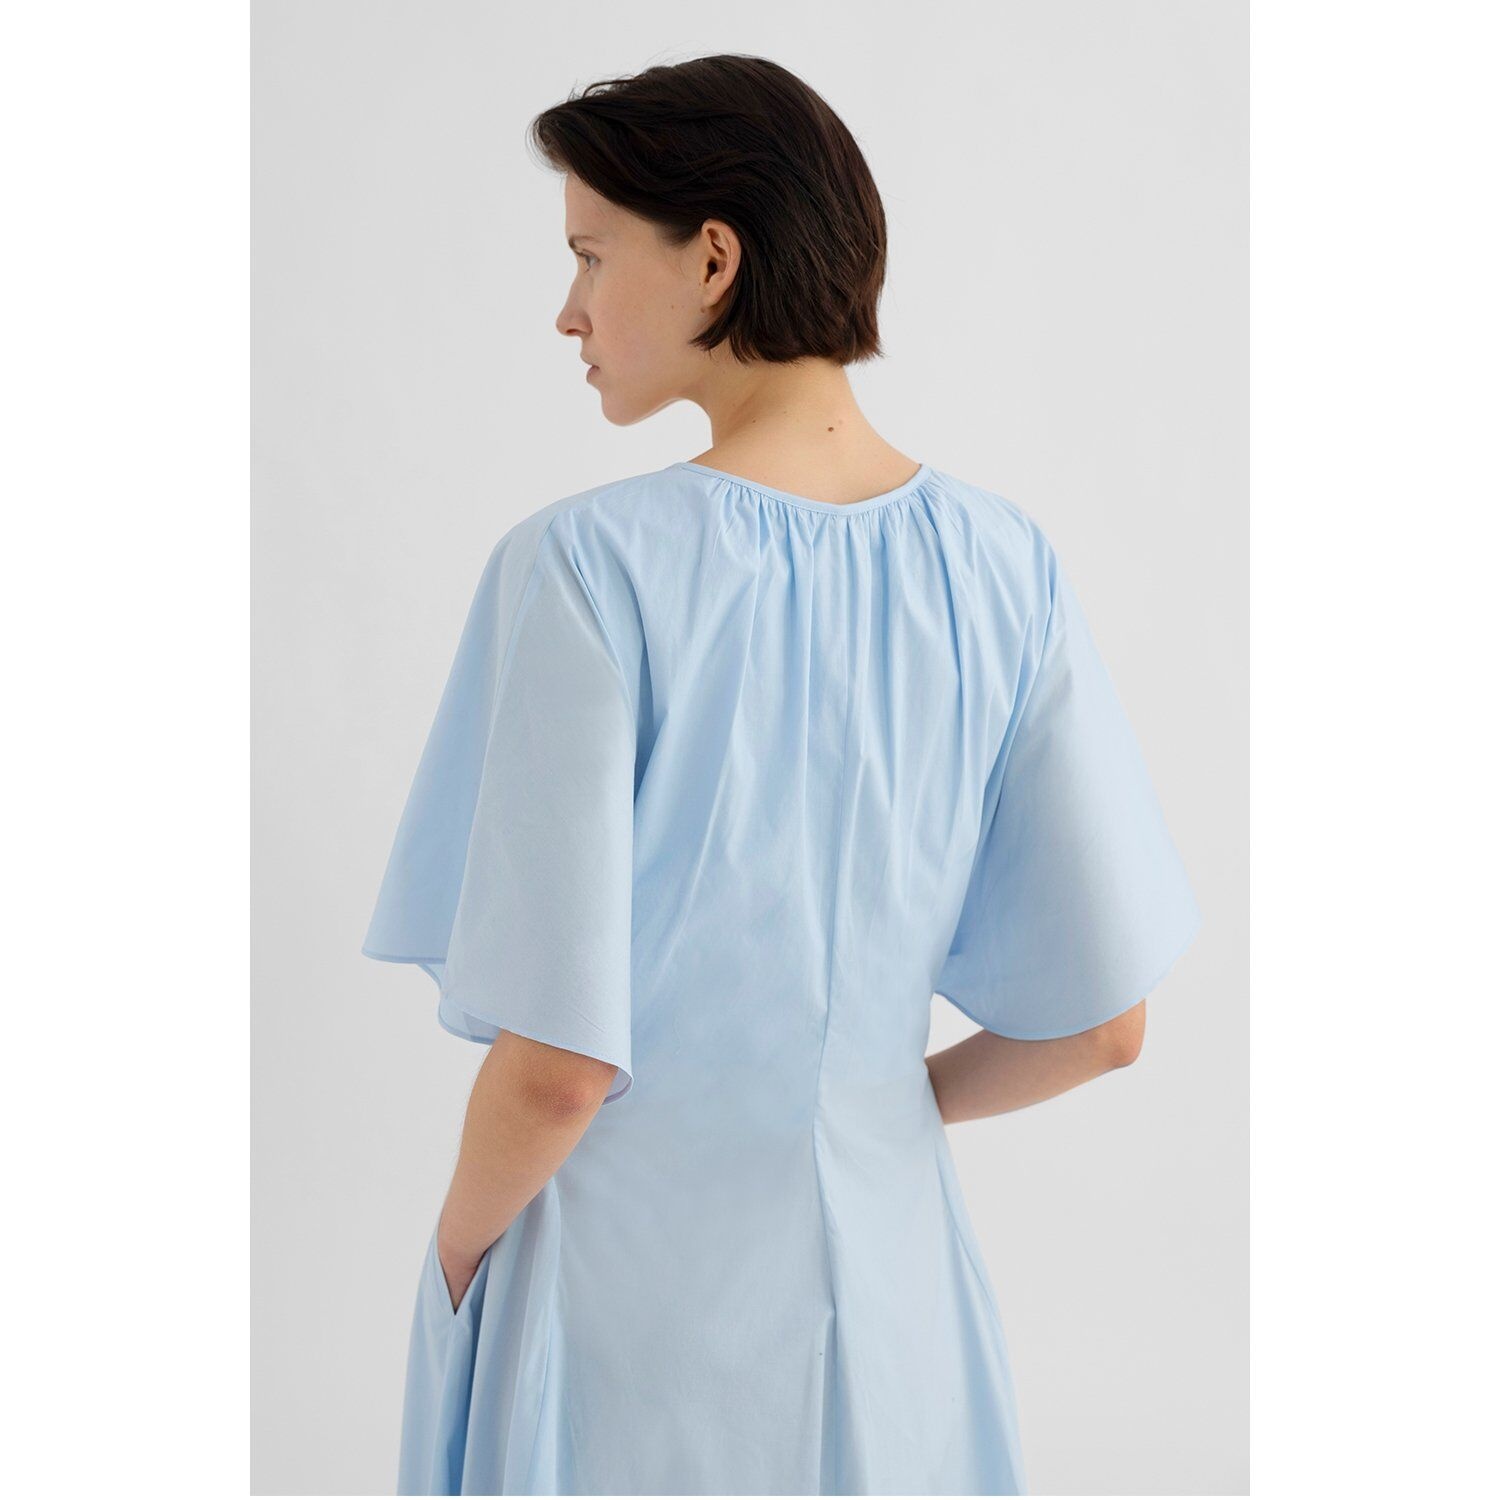 WING PANEL DRESS (BLUE) - 감각 있는 온라인 셀렉트샵 29CM